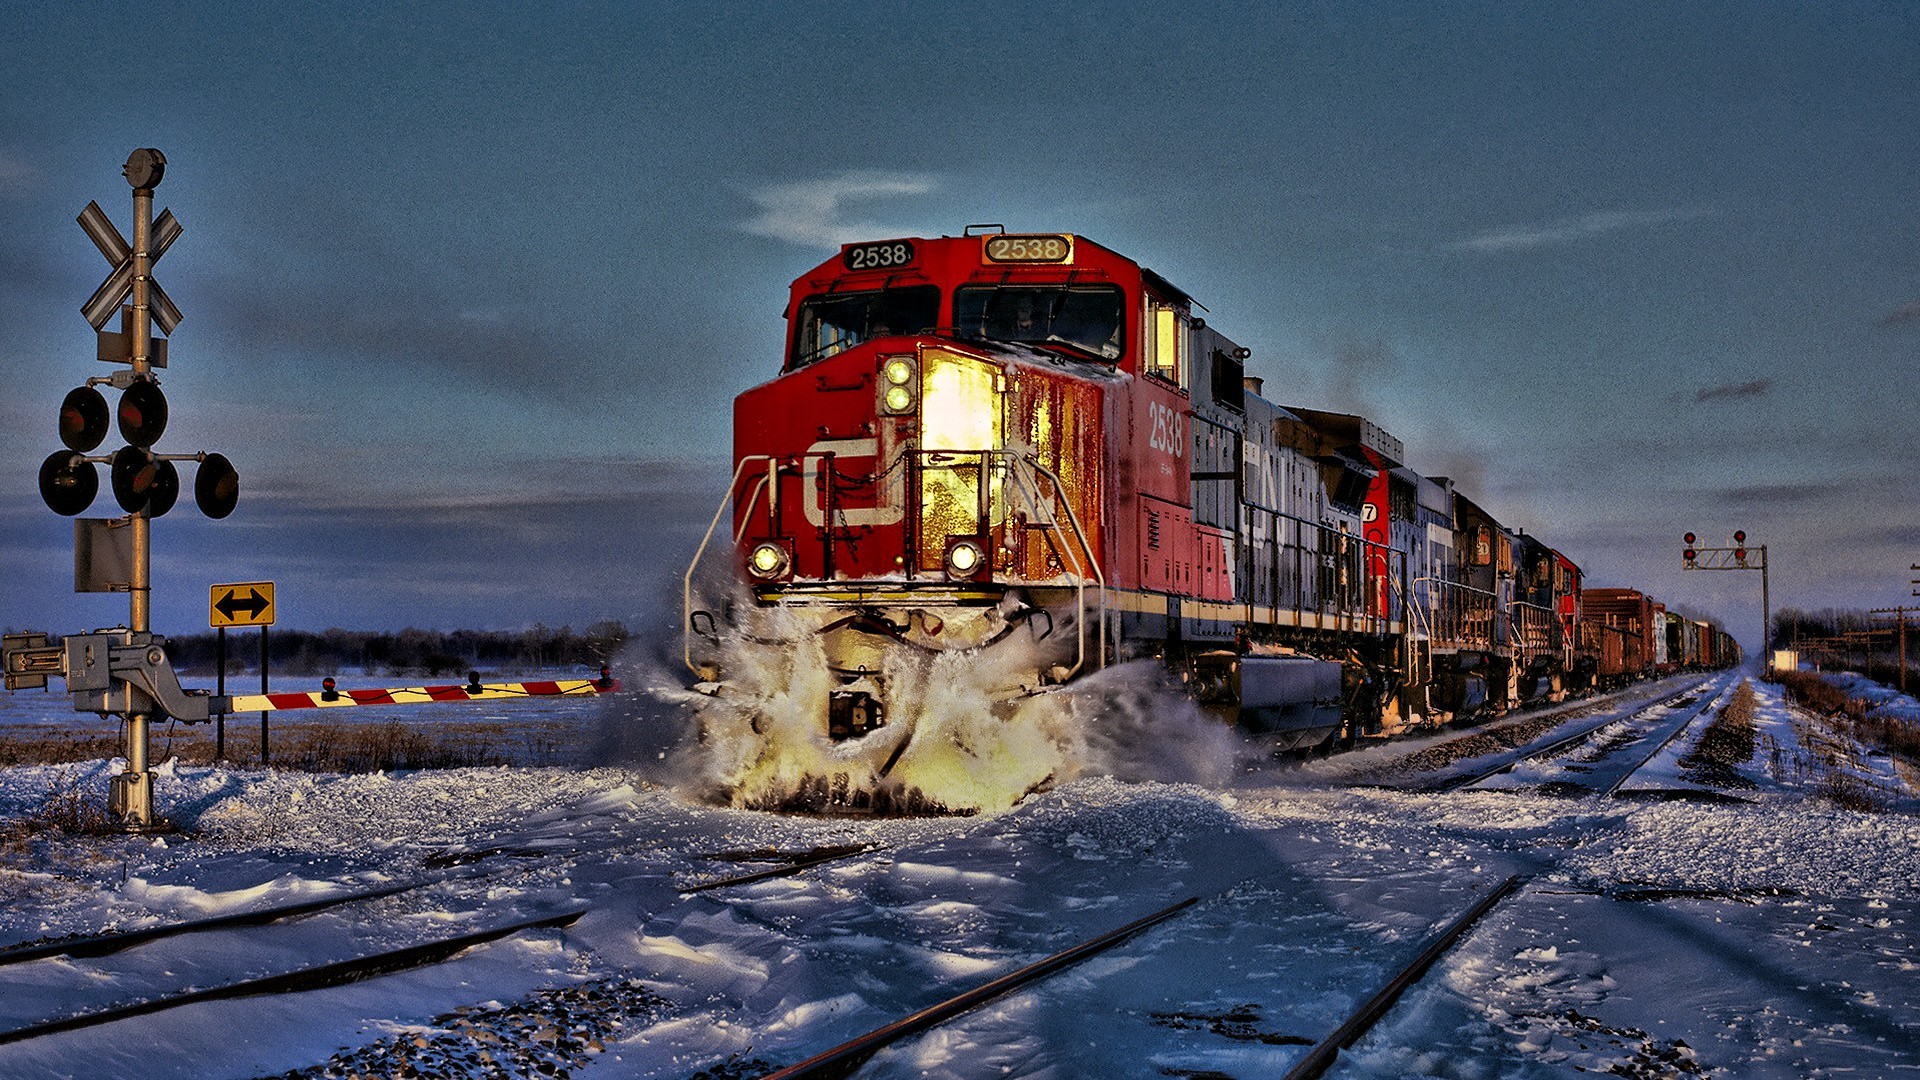 General 1920x1080 snow vehicle train railway crossing winter outdoors numbers